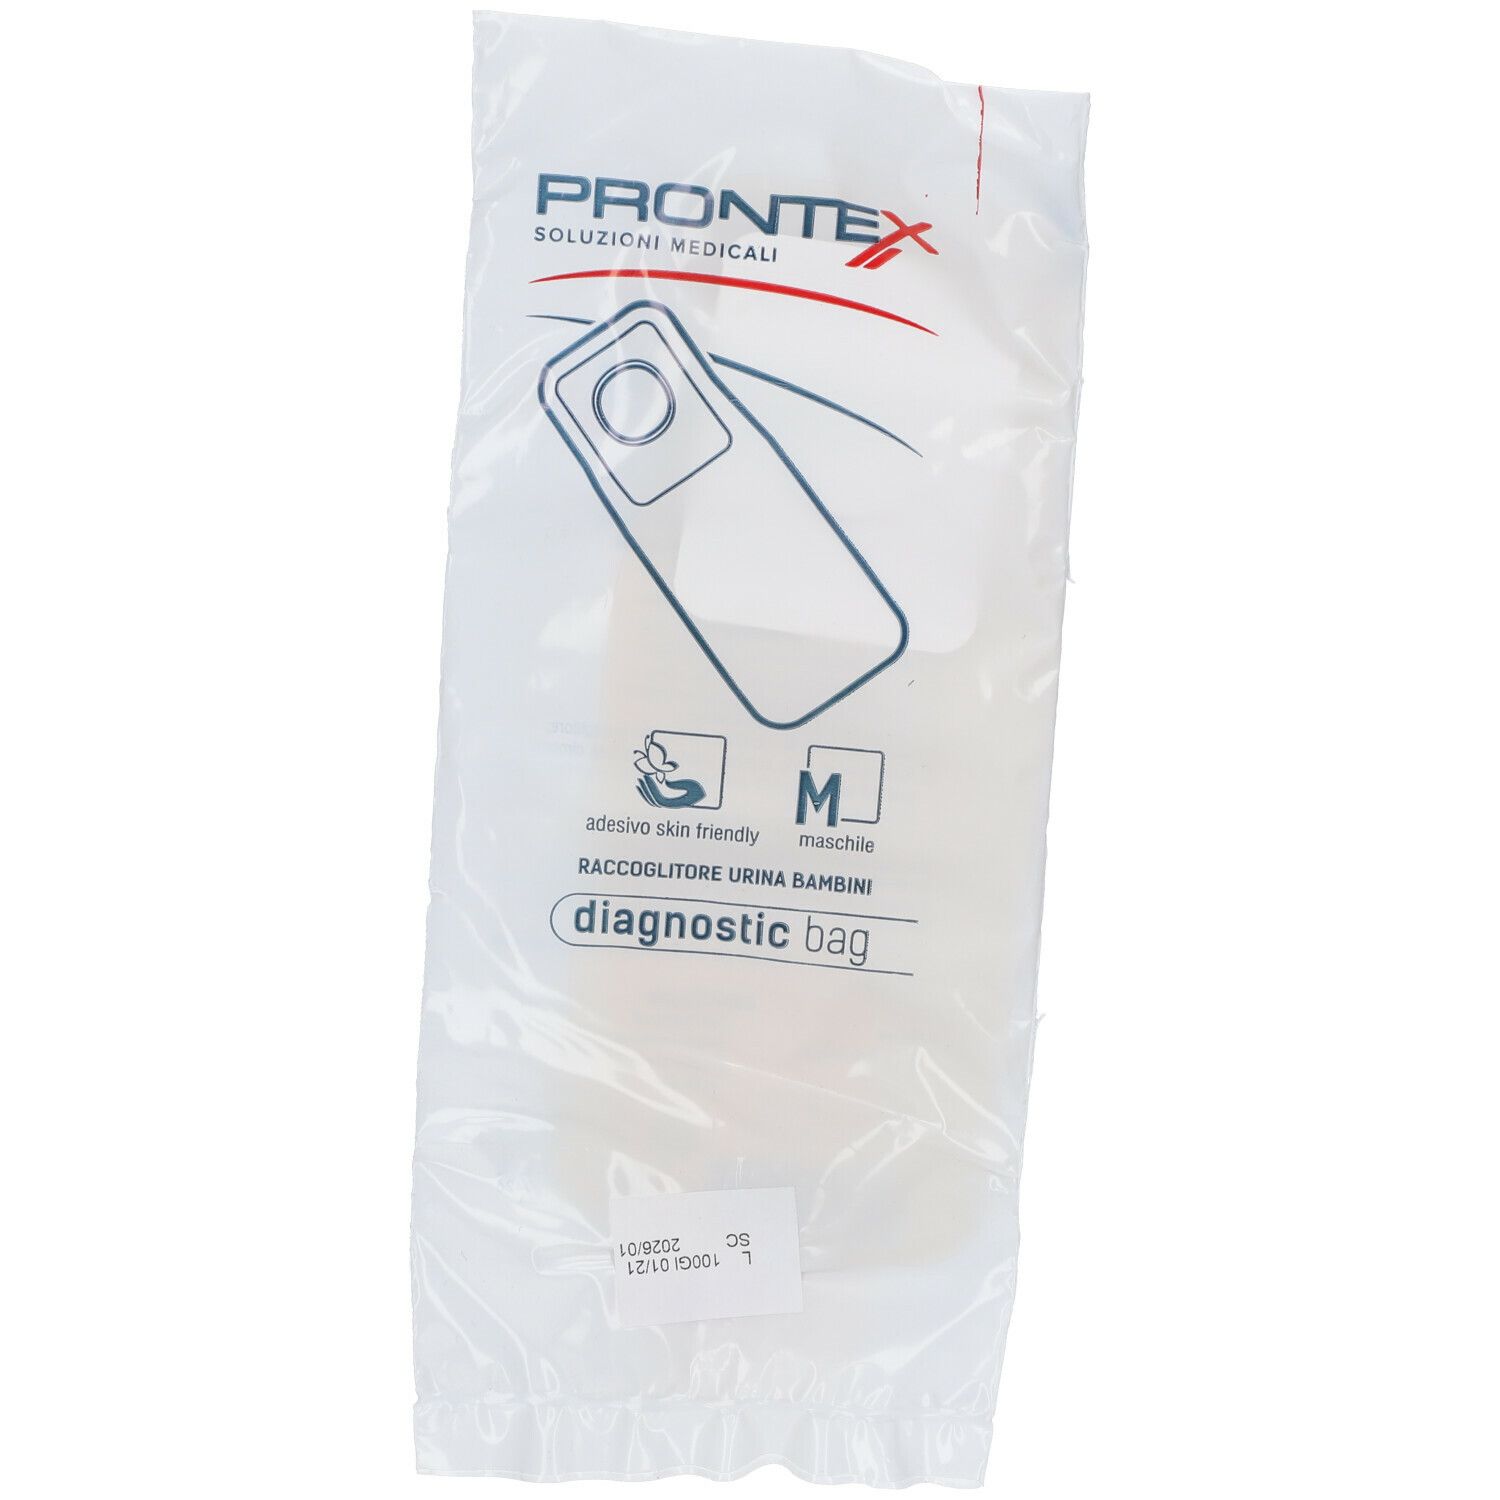 PRONTEX® Diagnostic Bag Maschile